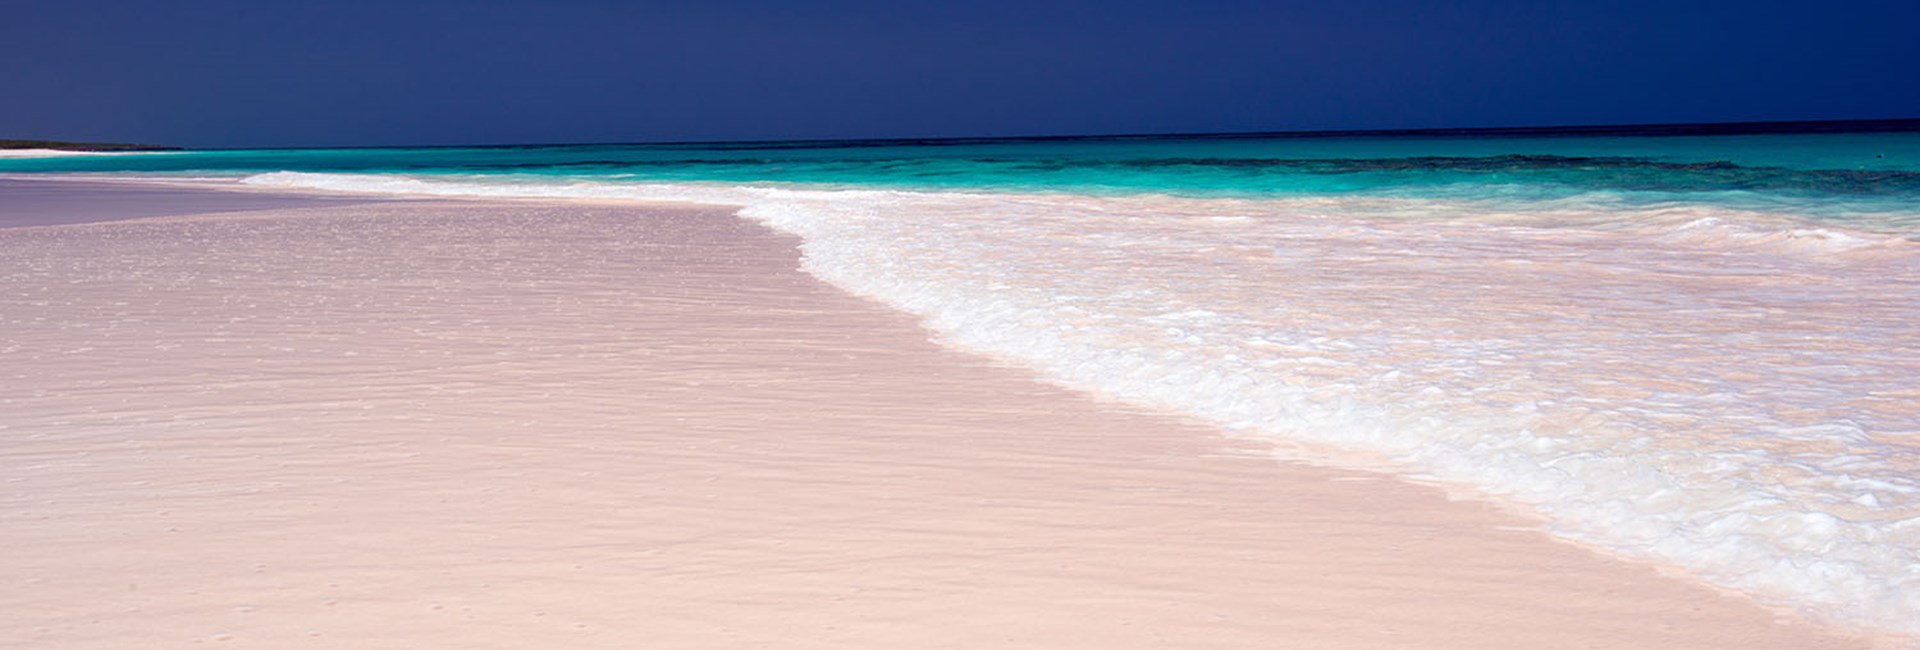 Waves crashing on a pink sand beach